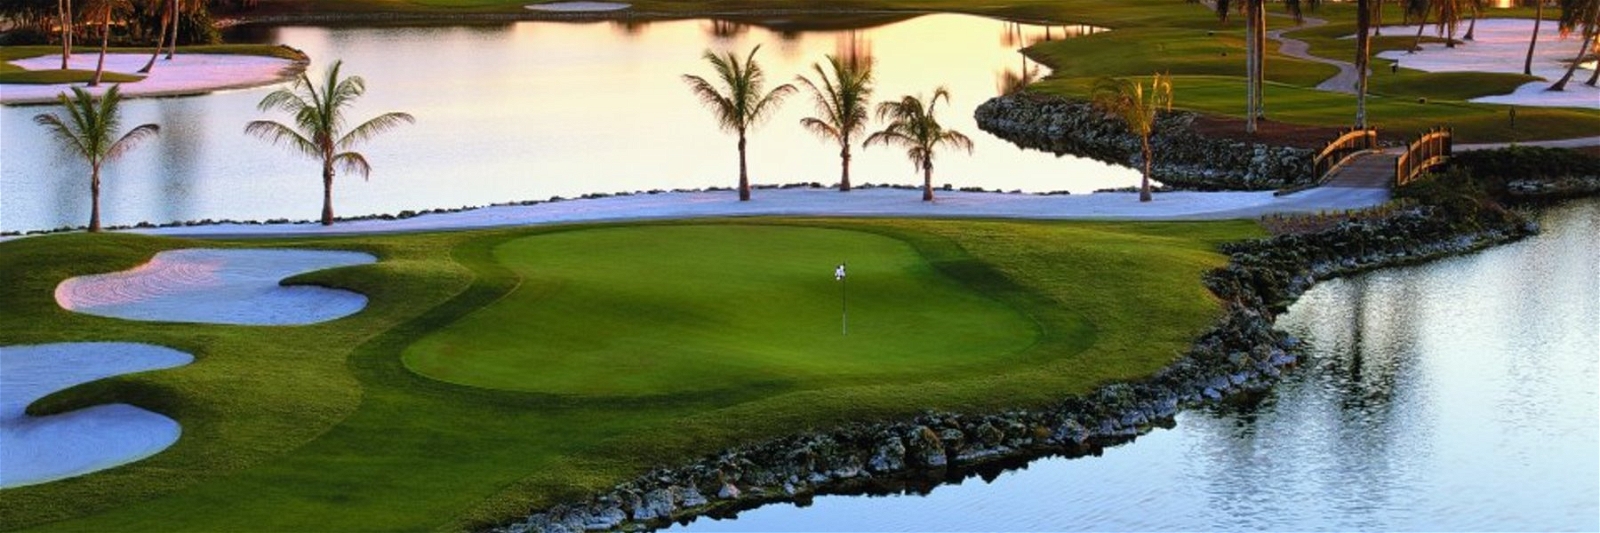 Golf Vacation Package - Lely Flamingo Island Club